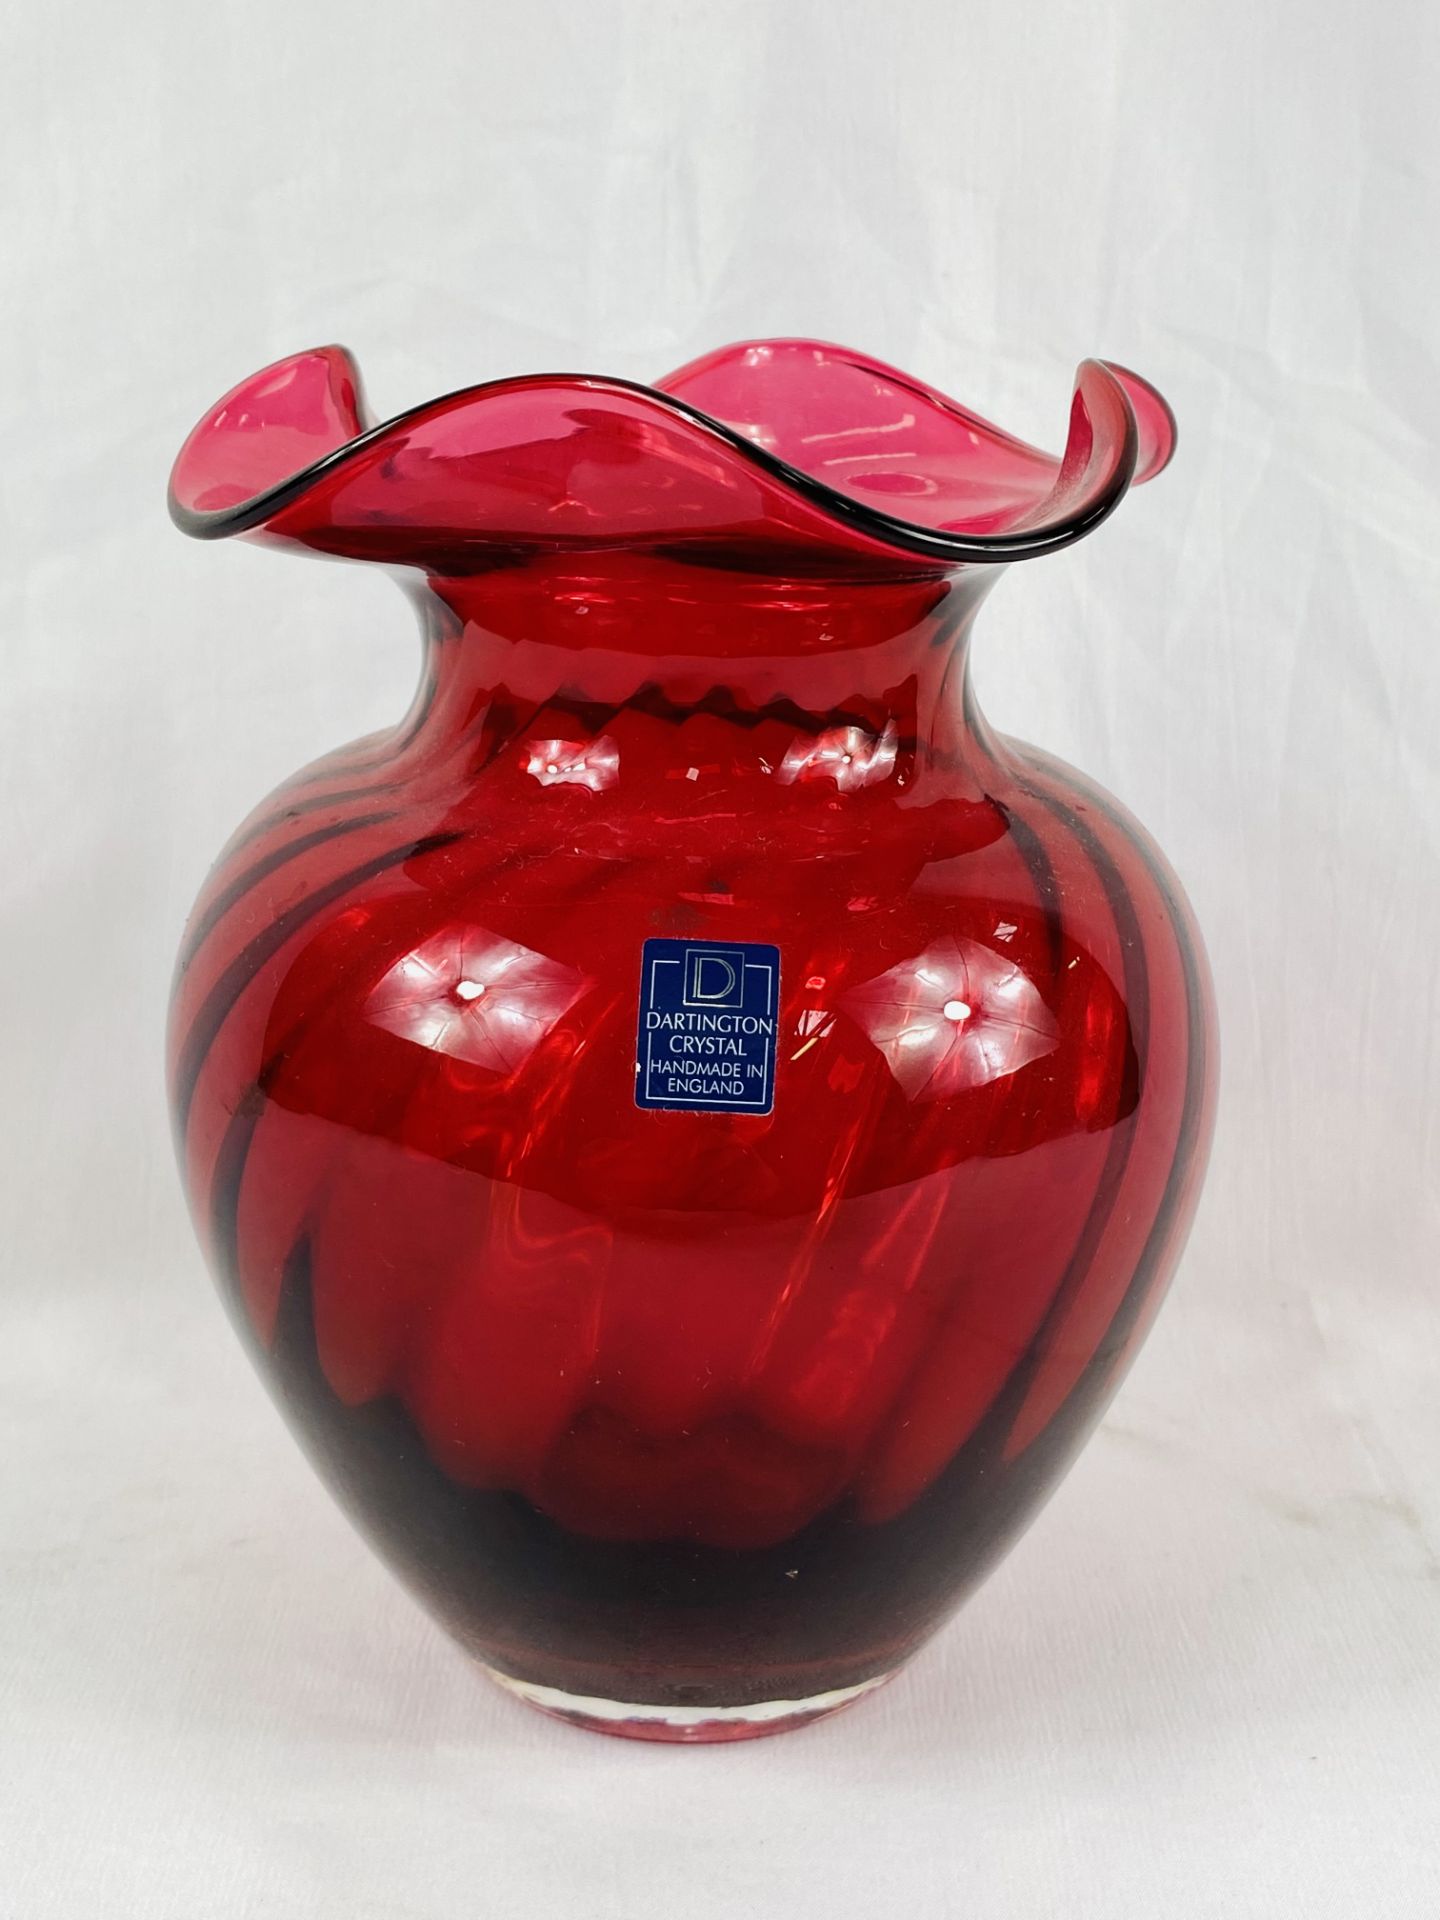 Dartington Crystal vase